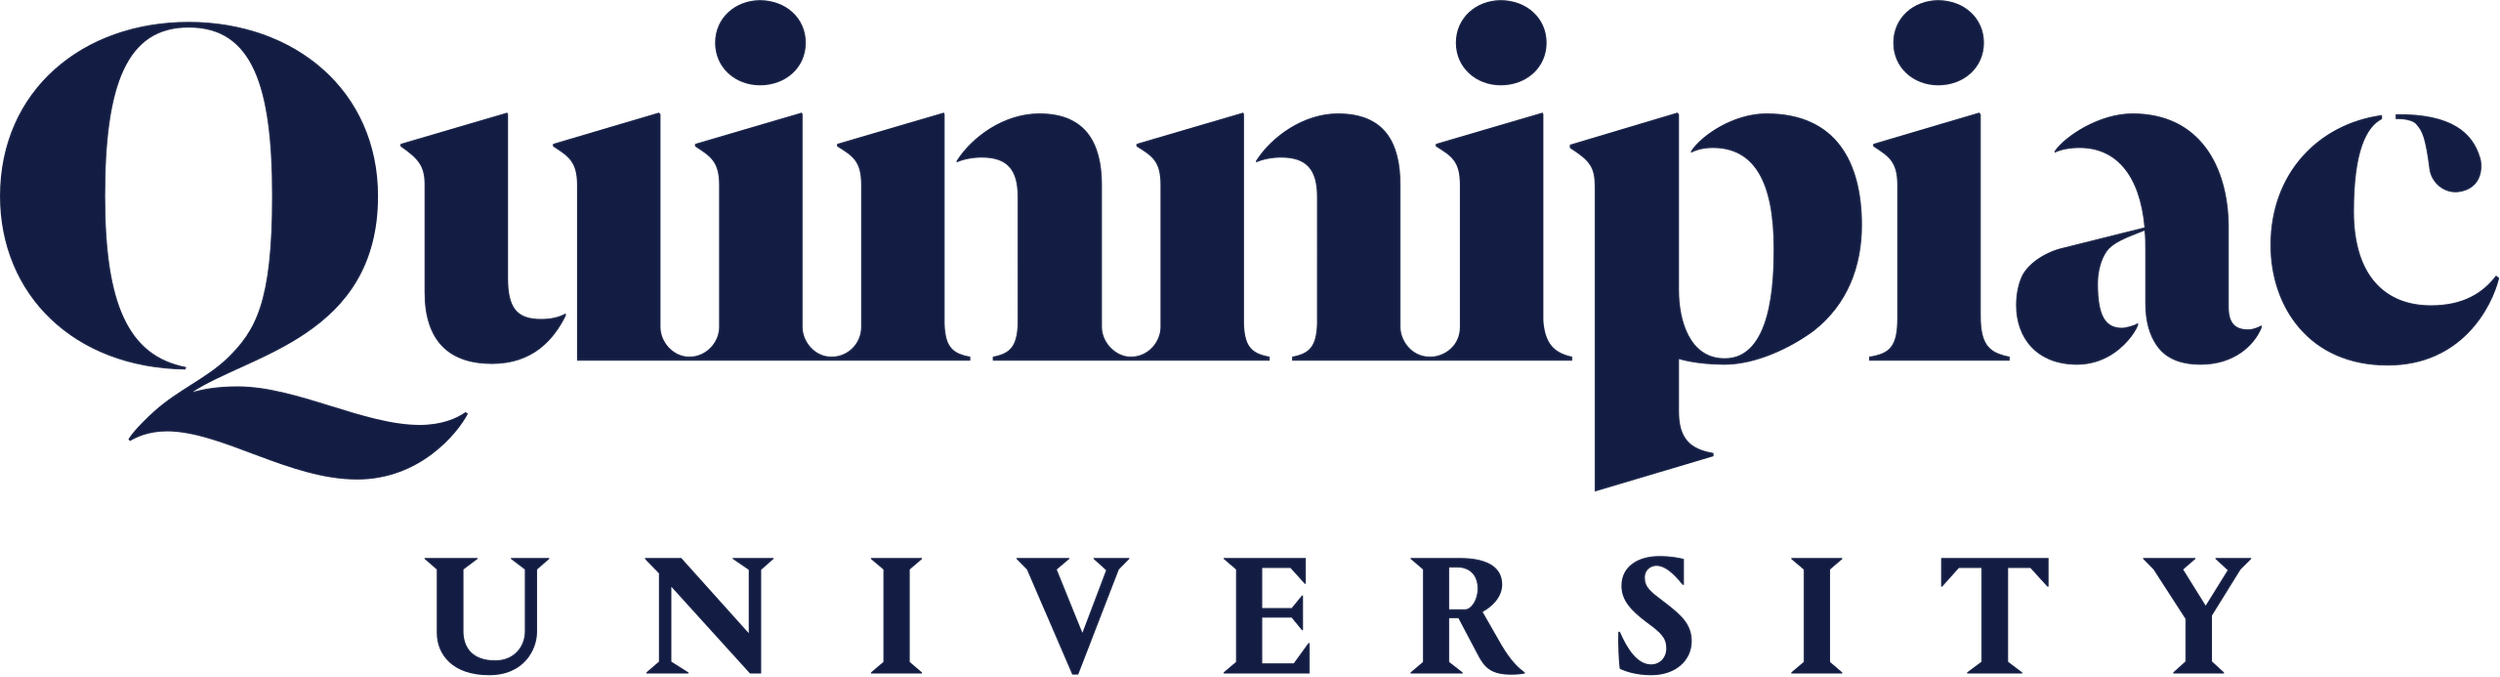 Quinnipiac_University_logo.png